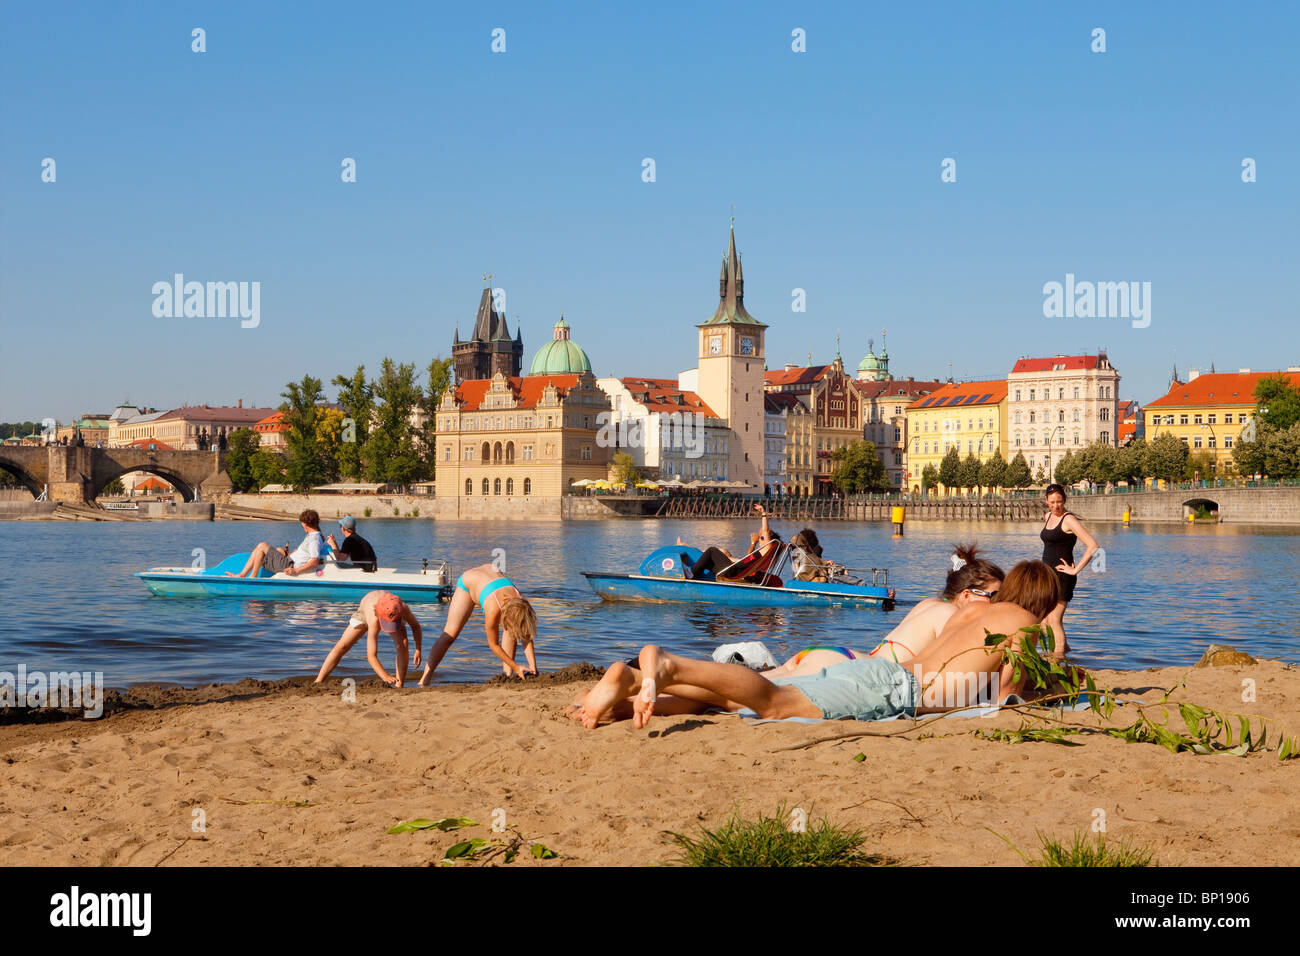 prague - people enjoying summer strelecky island beach - old town in background Stock Photo